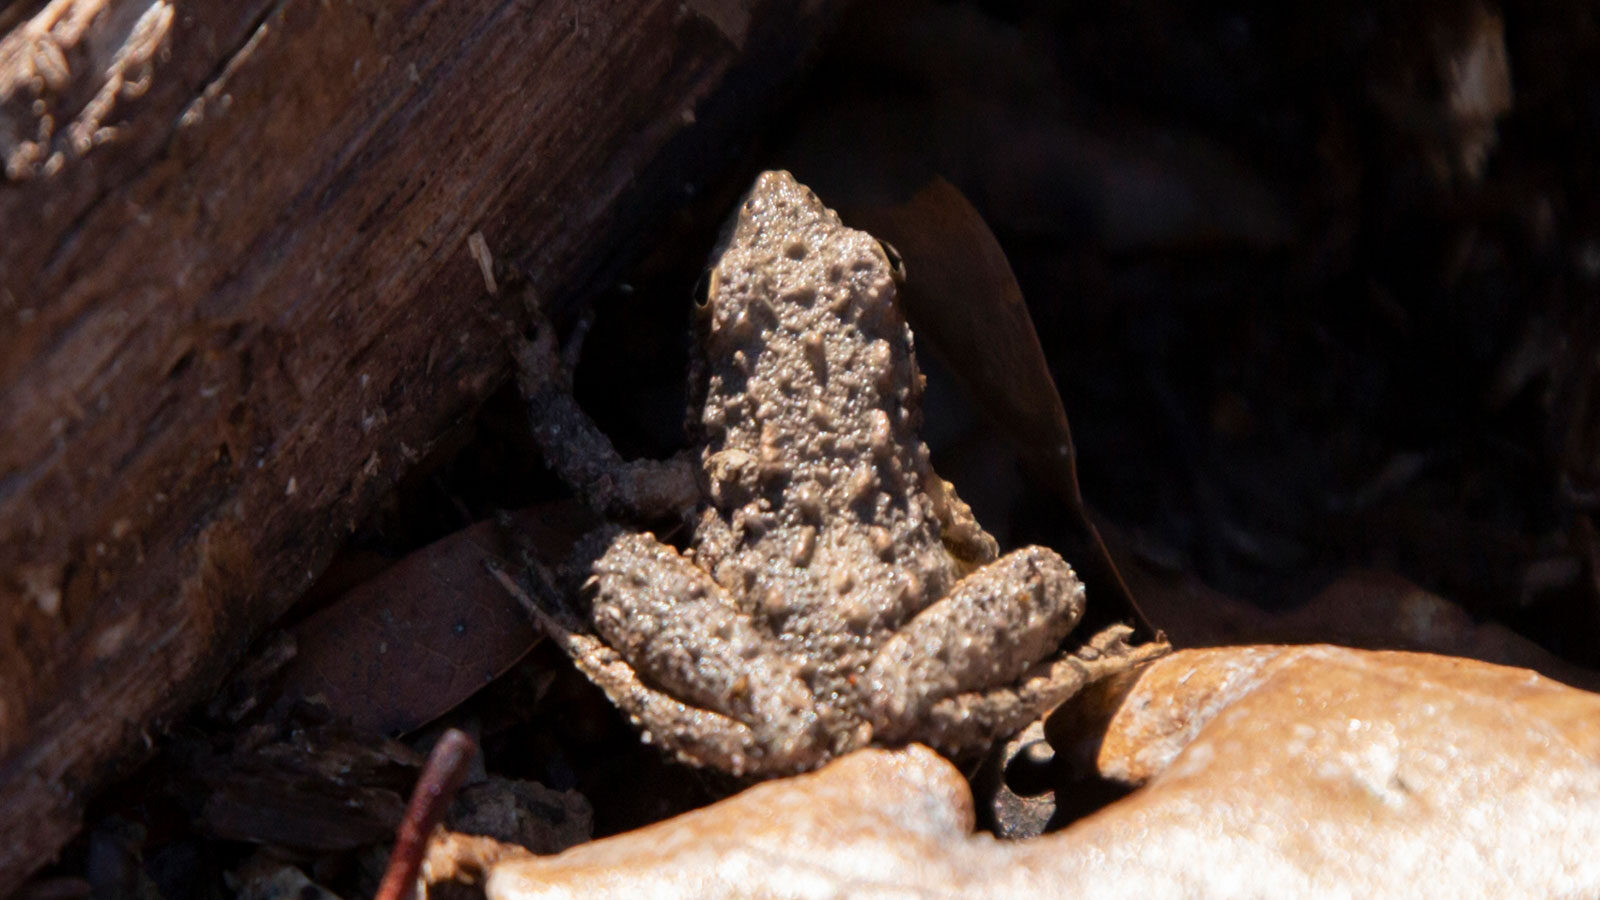 Blanchard's cricket frog on a dead, brown leaf near a fallen log